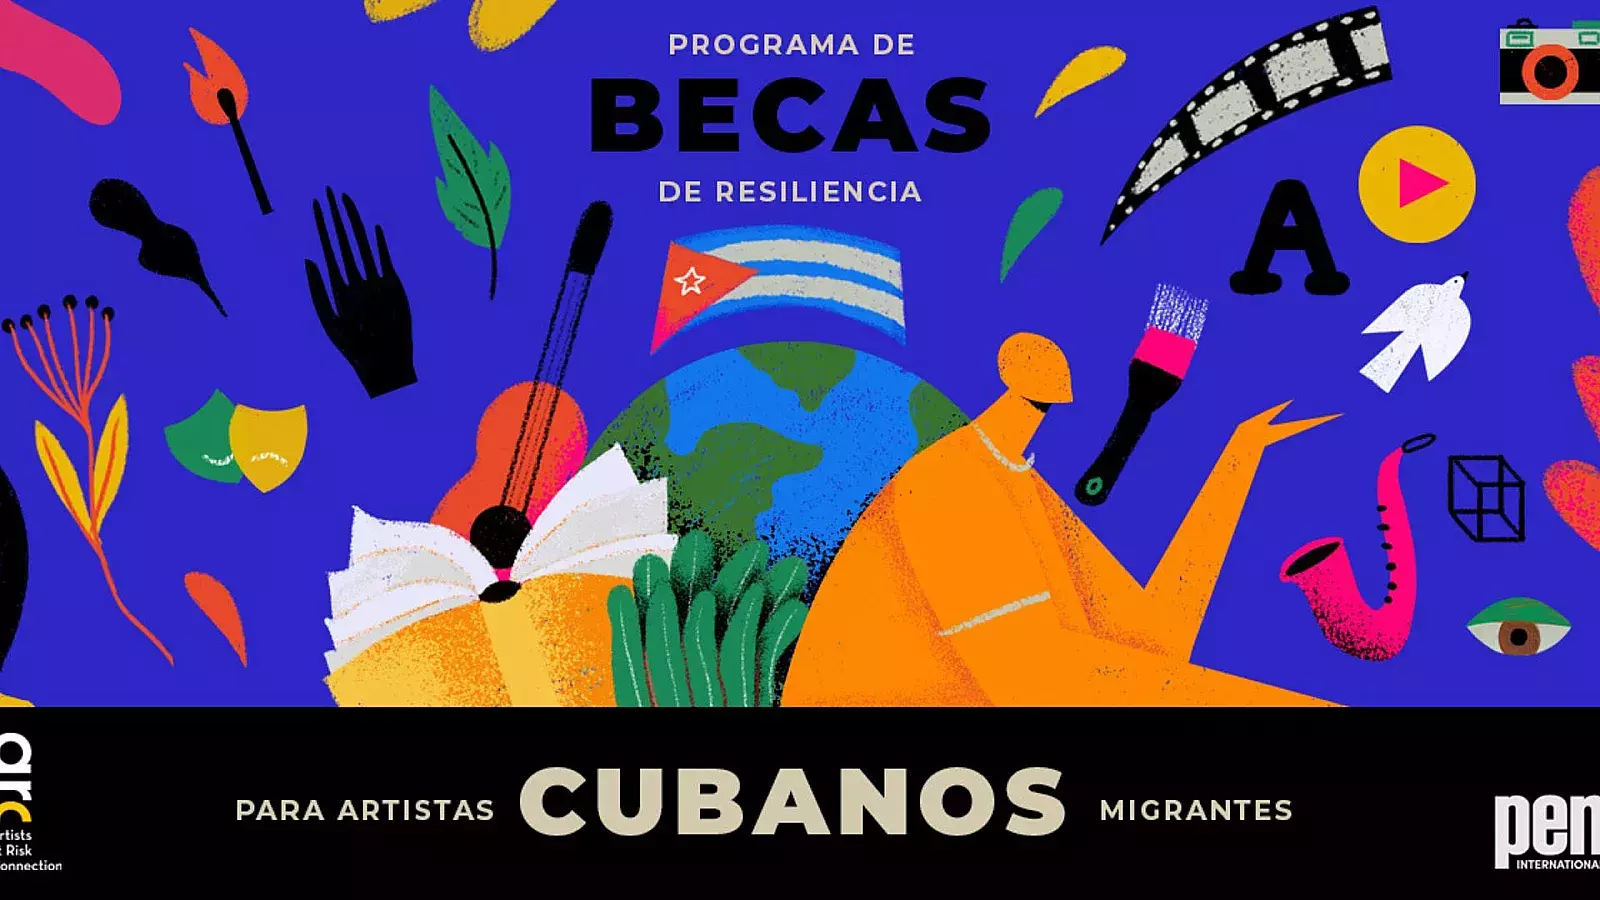 Programa de becas de resiliencia para artistas cubanos migrantes